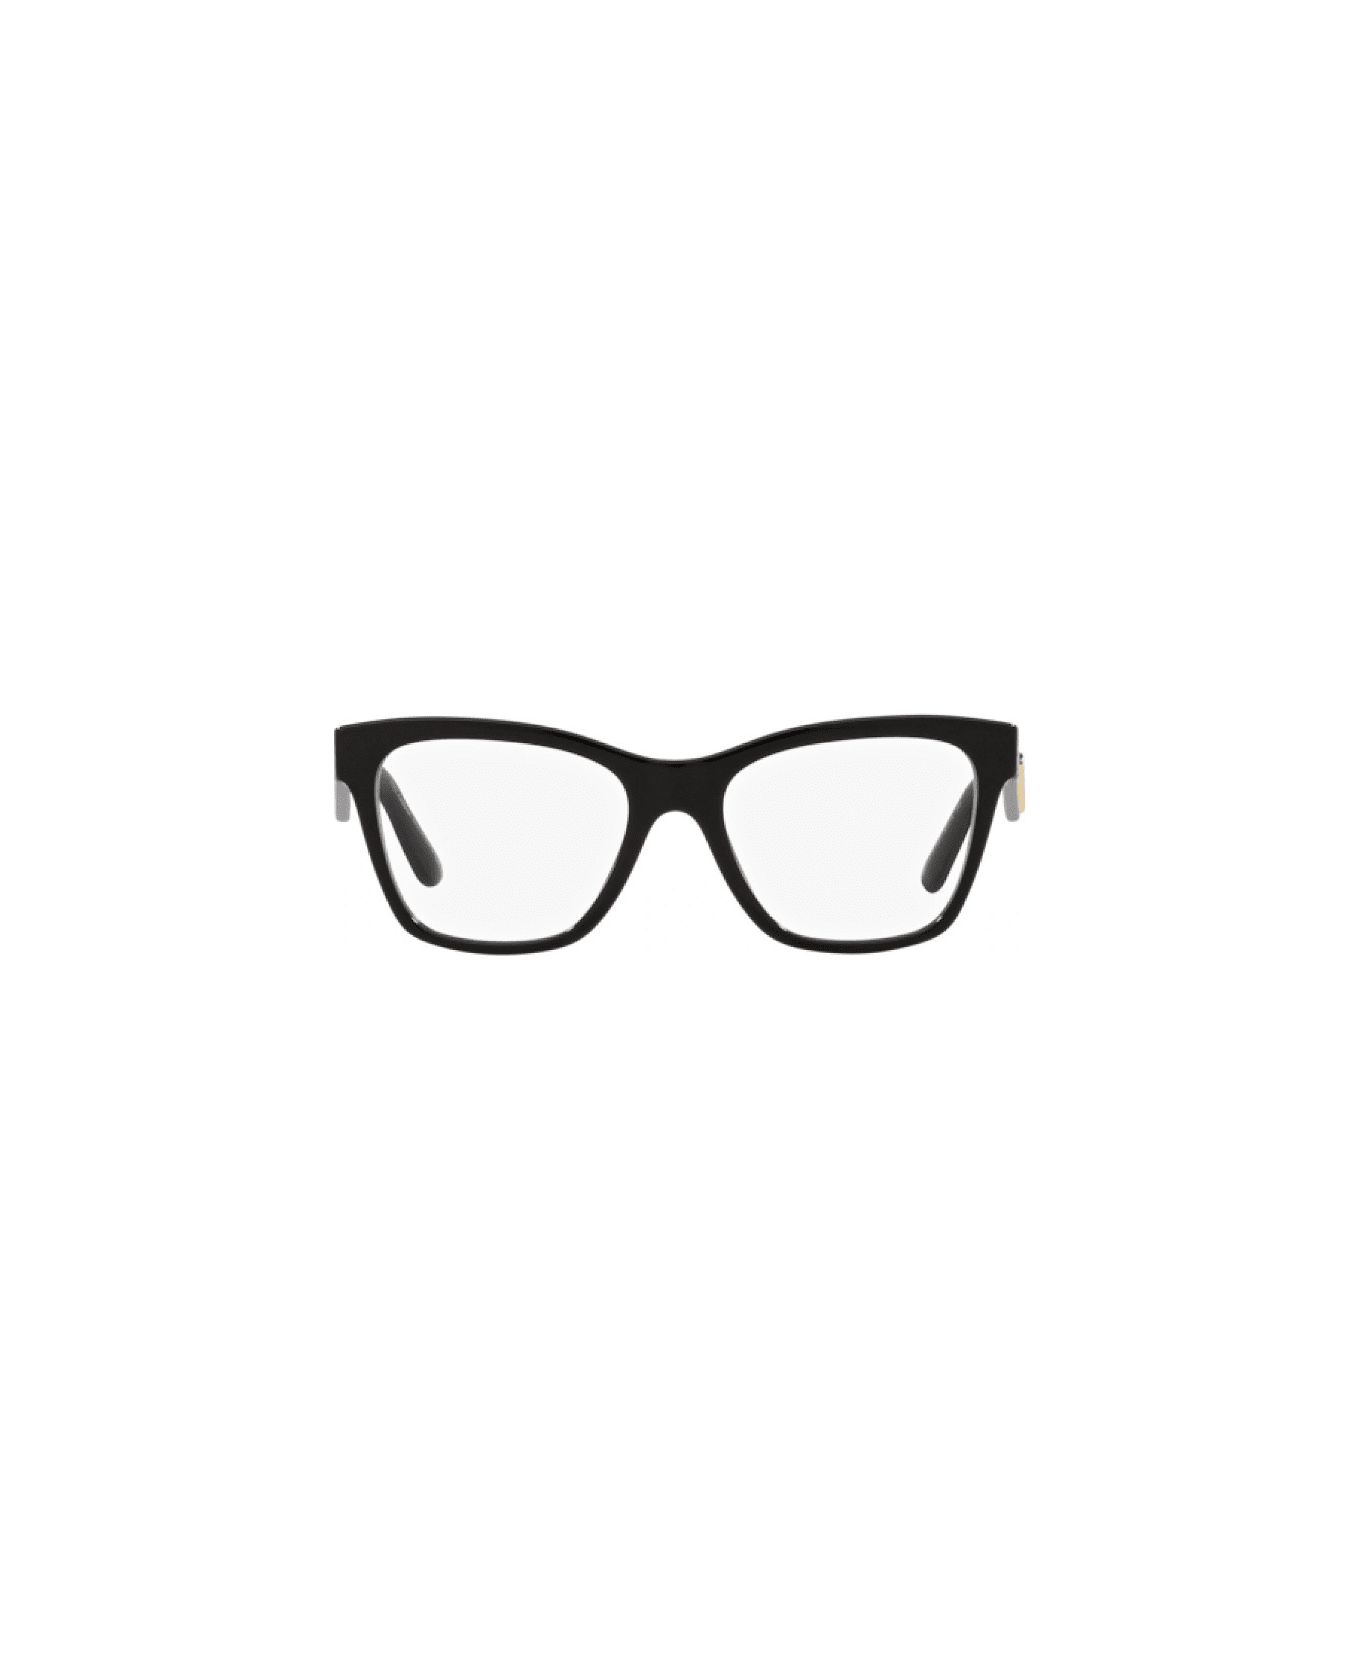 Dolce & Gabbana Eyewear DG3374-501 Glasses - Nero